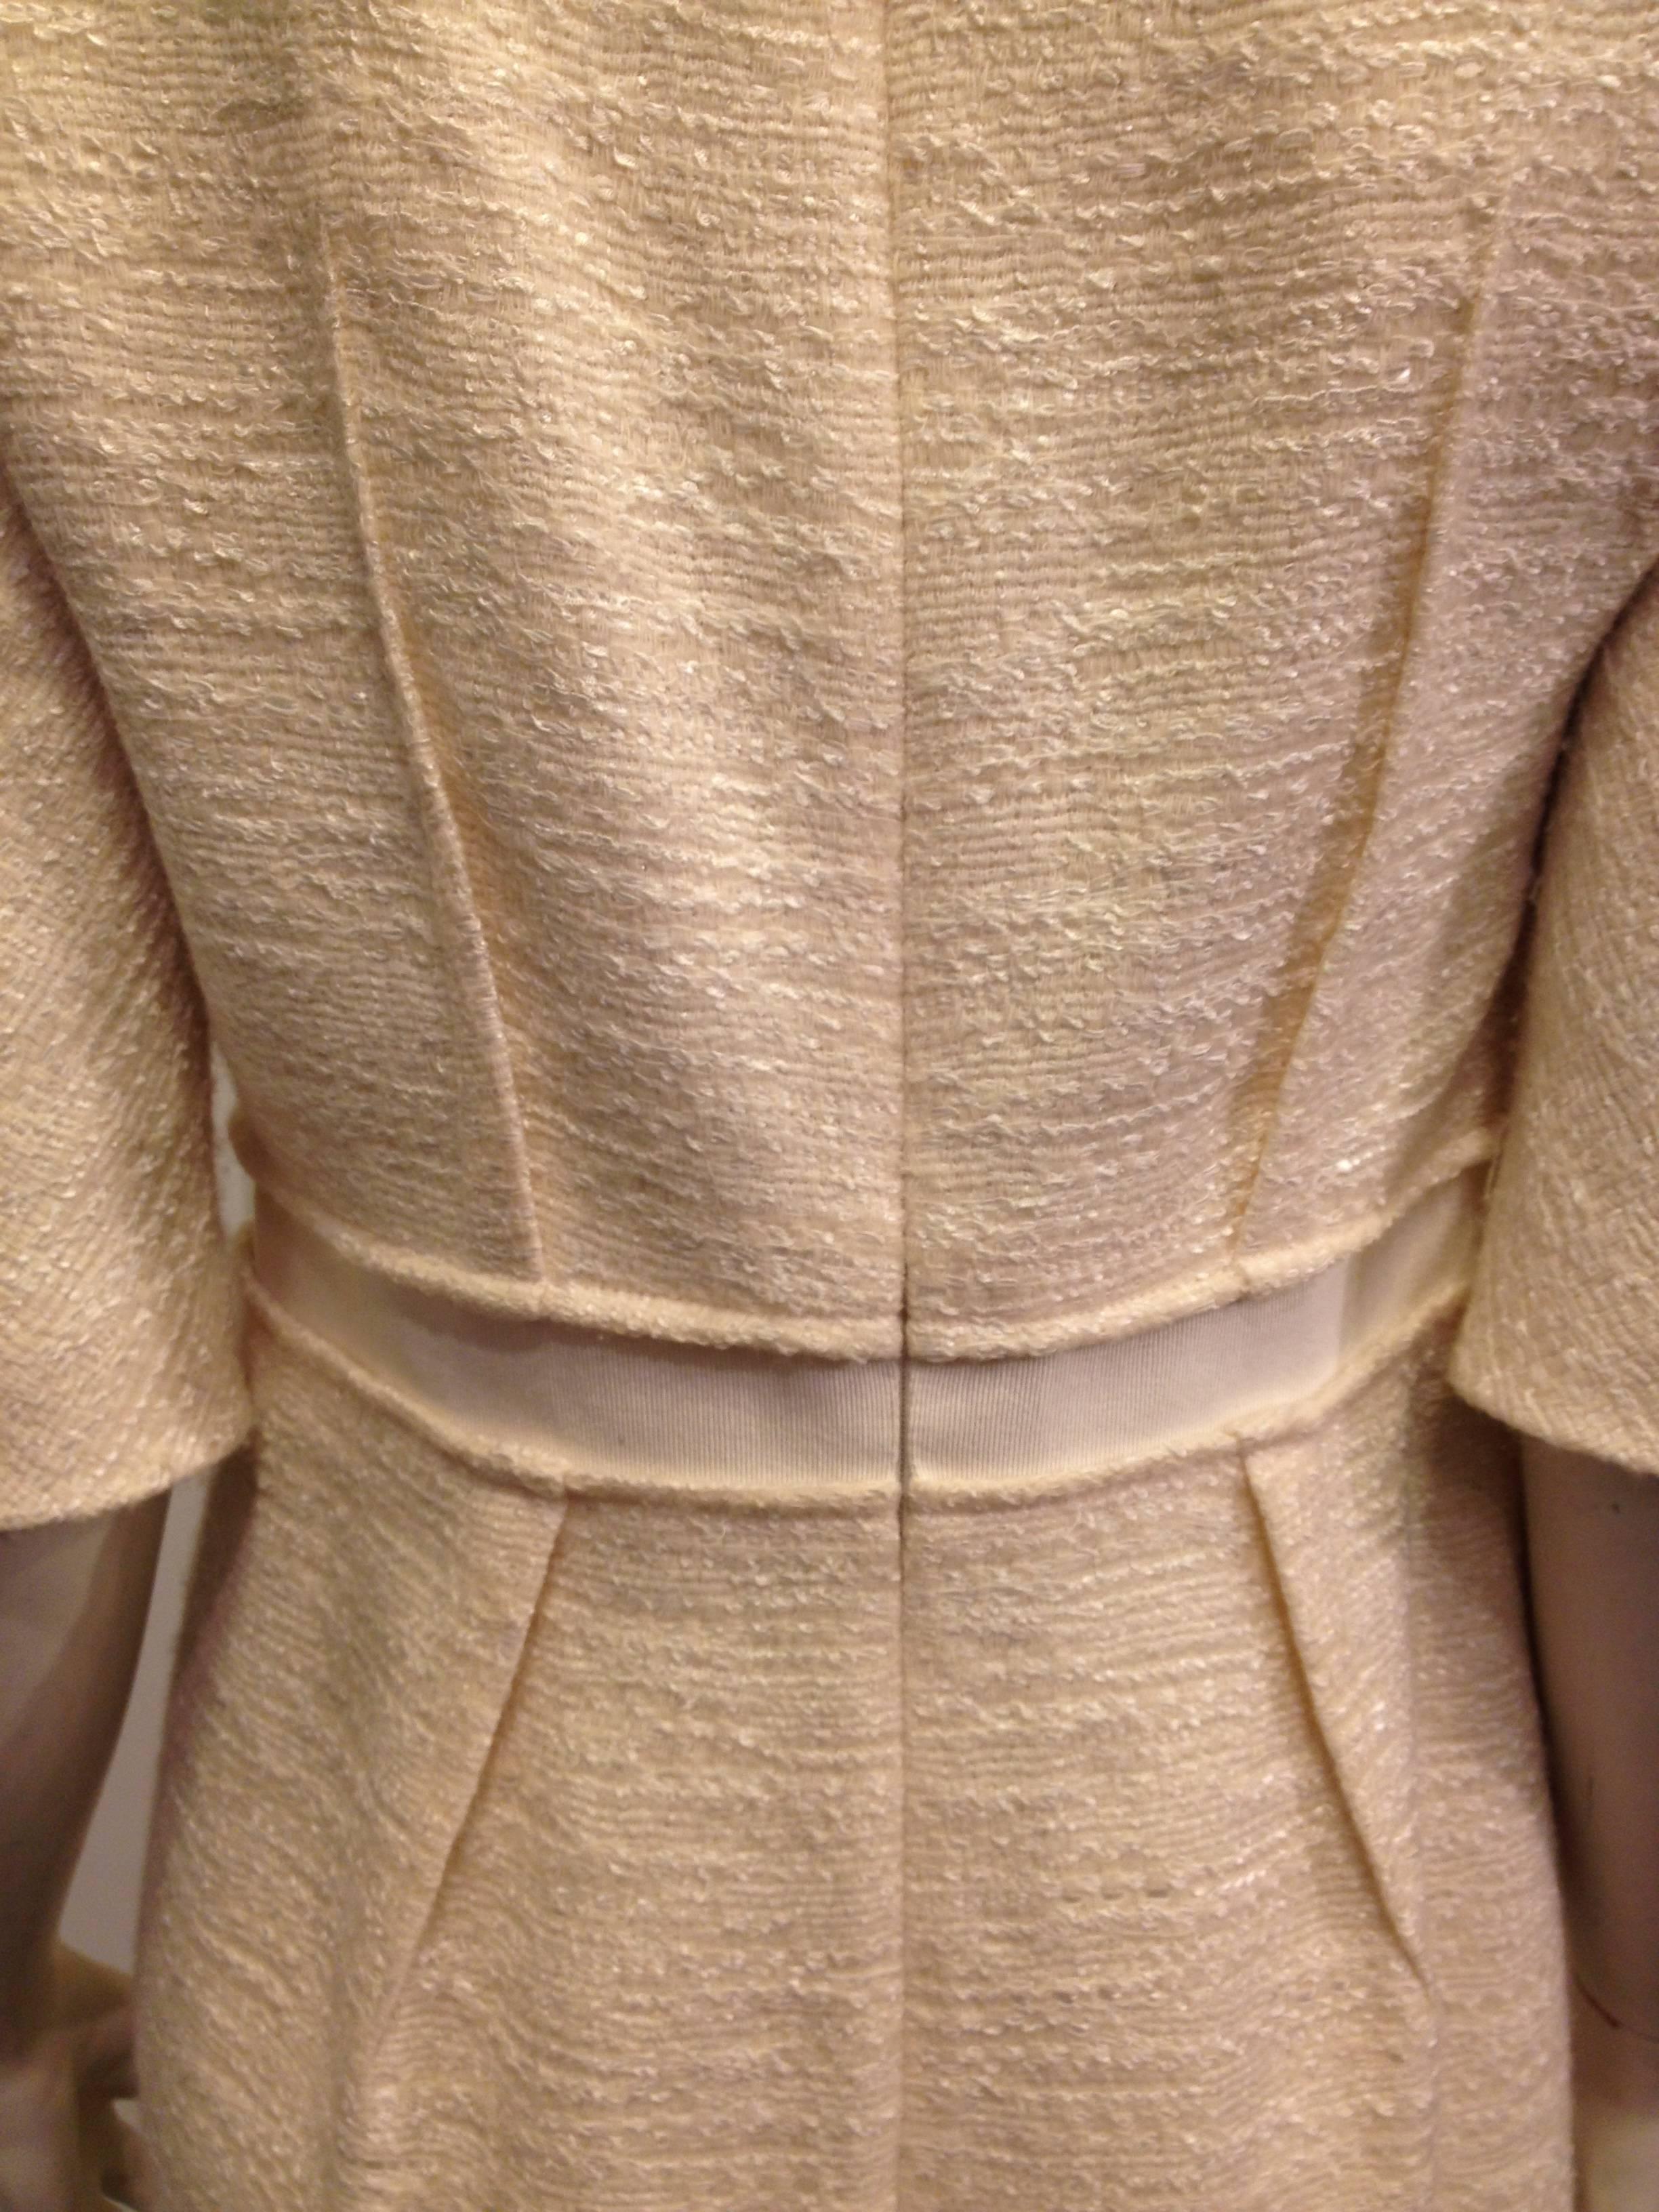 Giambattista Valli Cream Tweed Dress 1